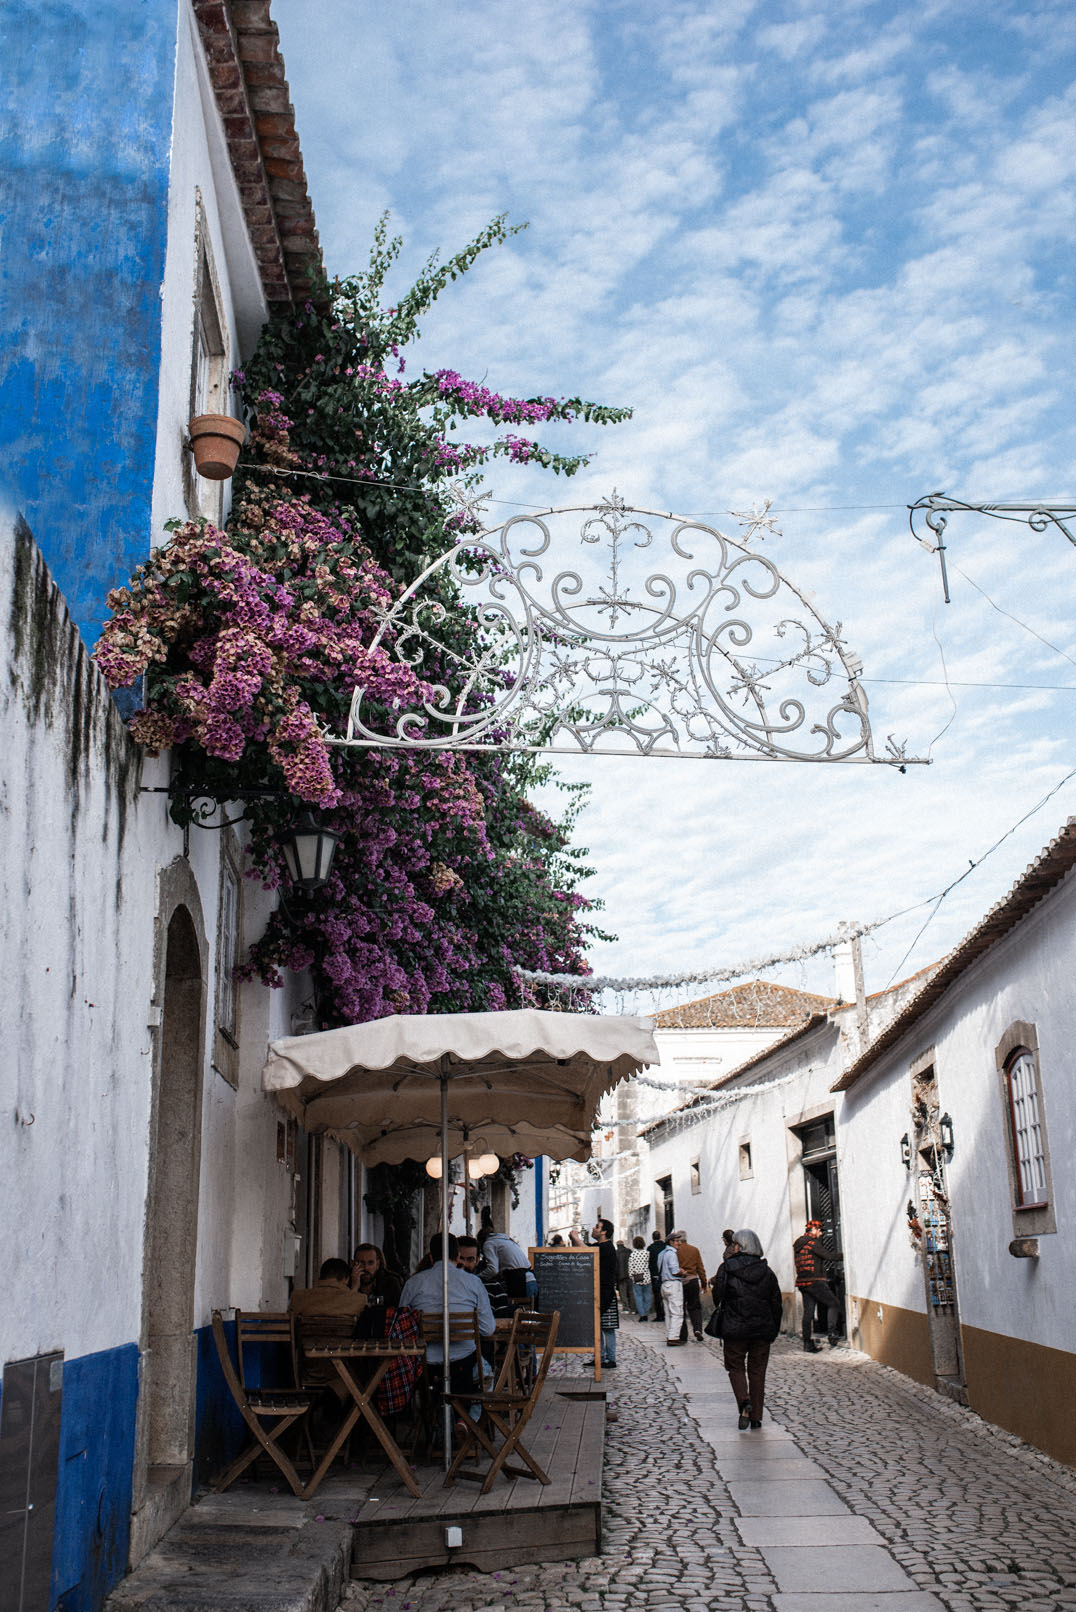 Óbidos Christmas market - Obidos streets with Christmas decorations